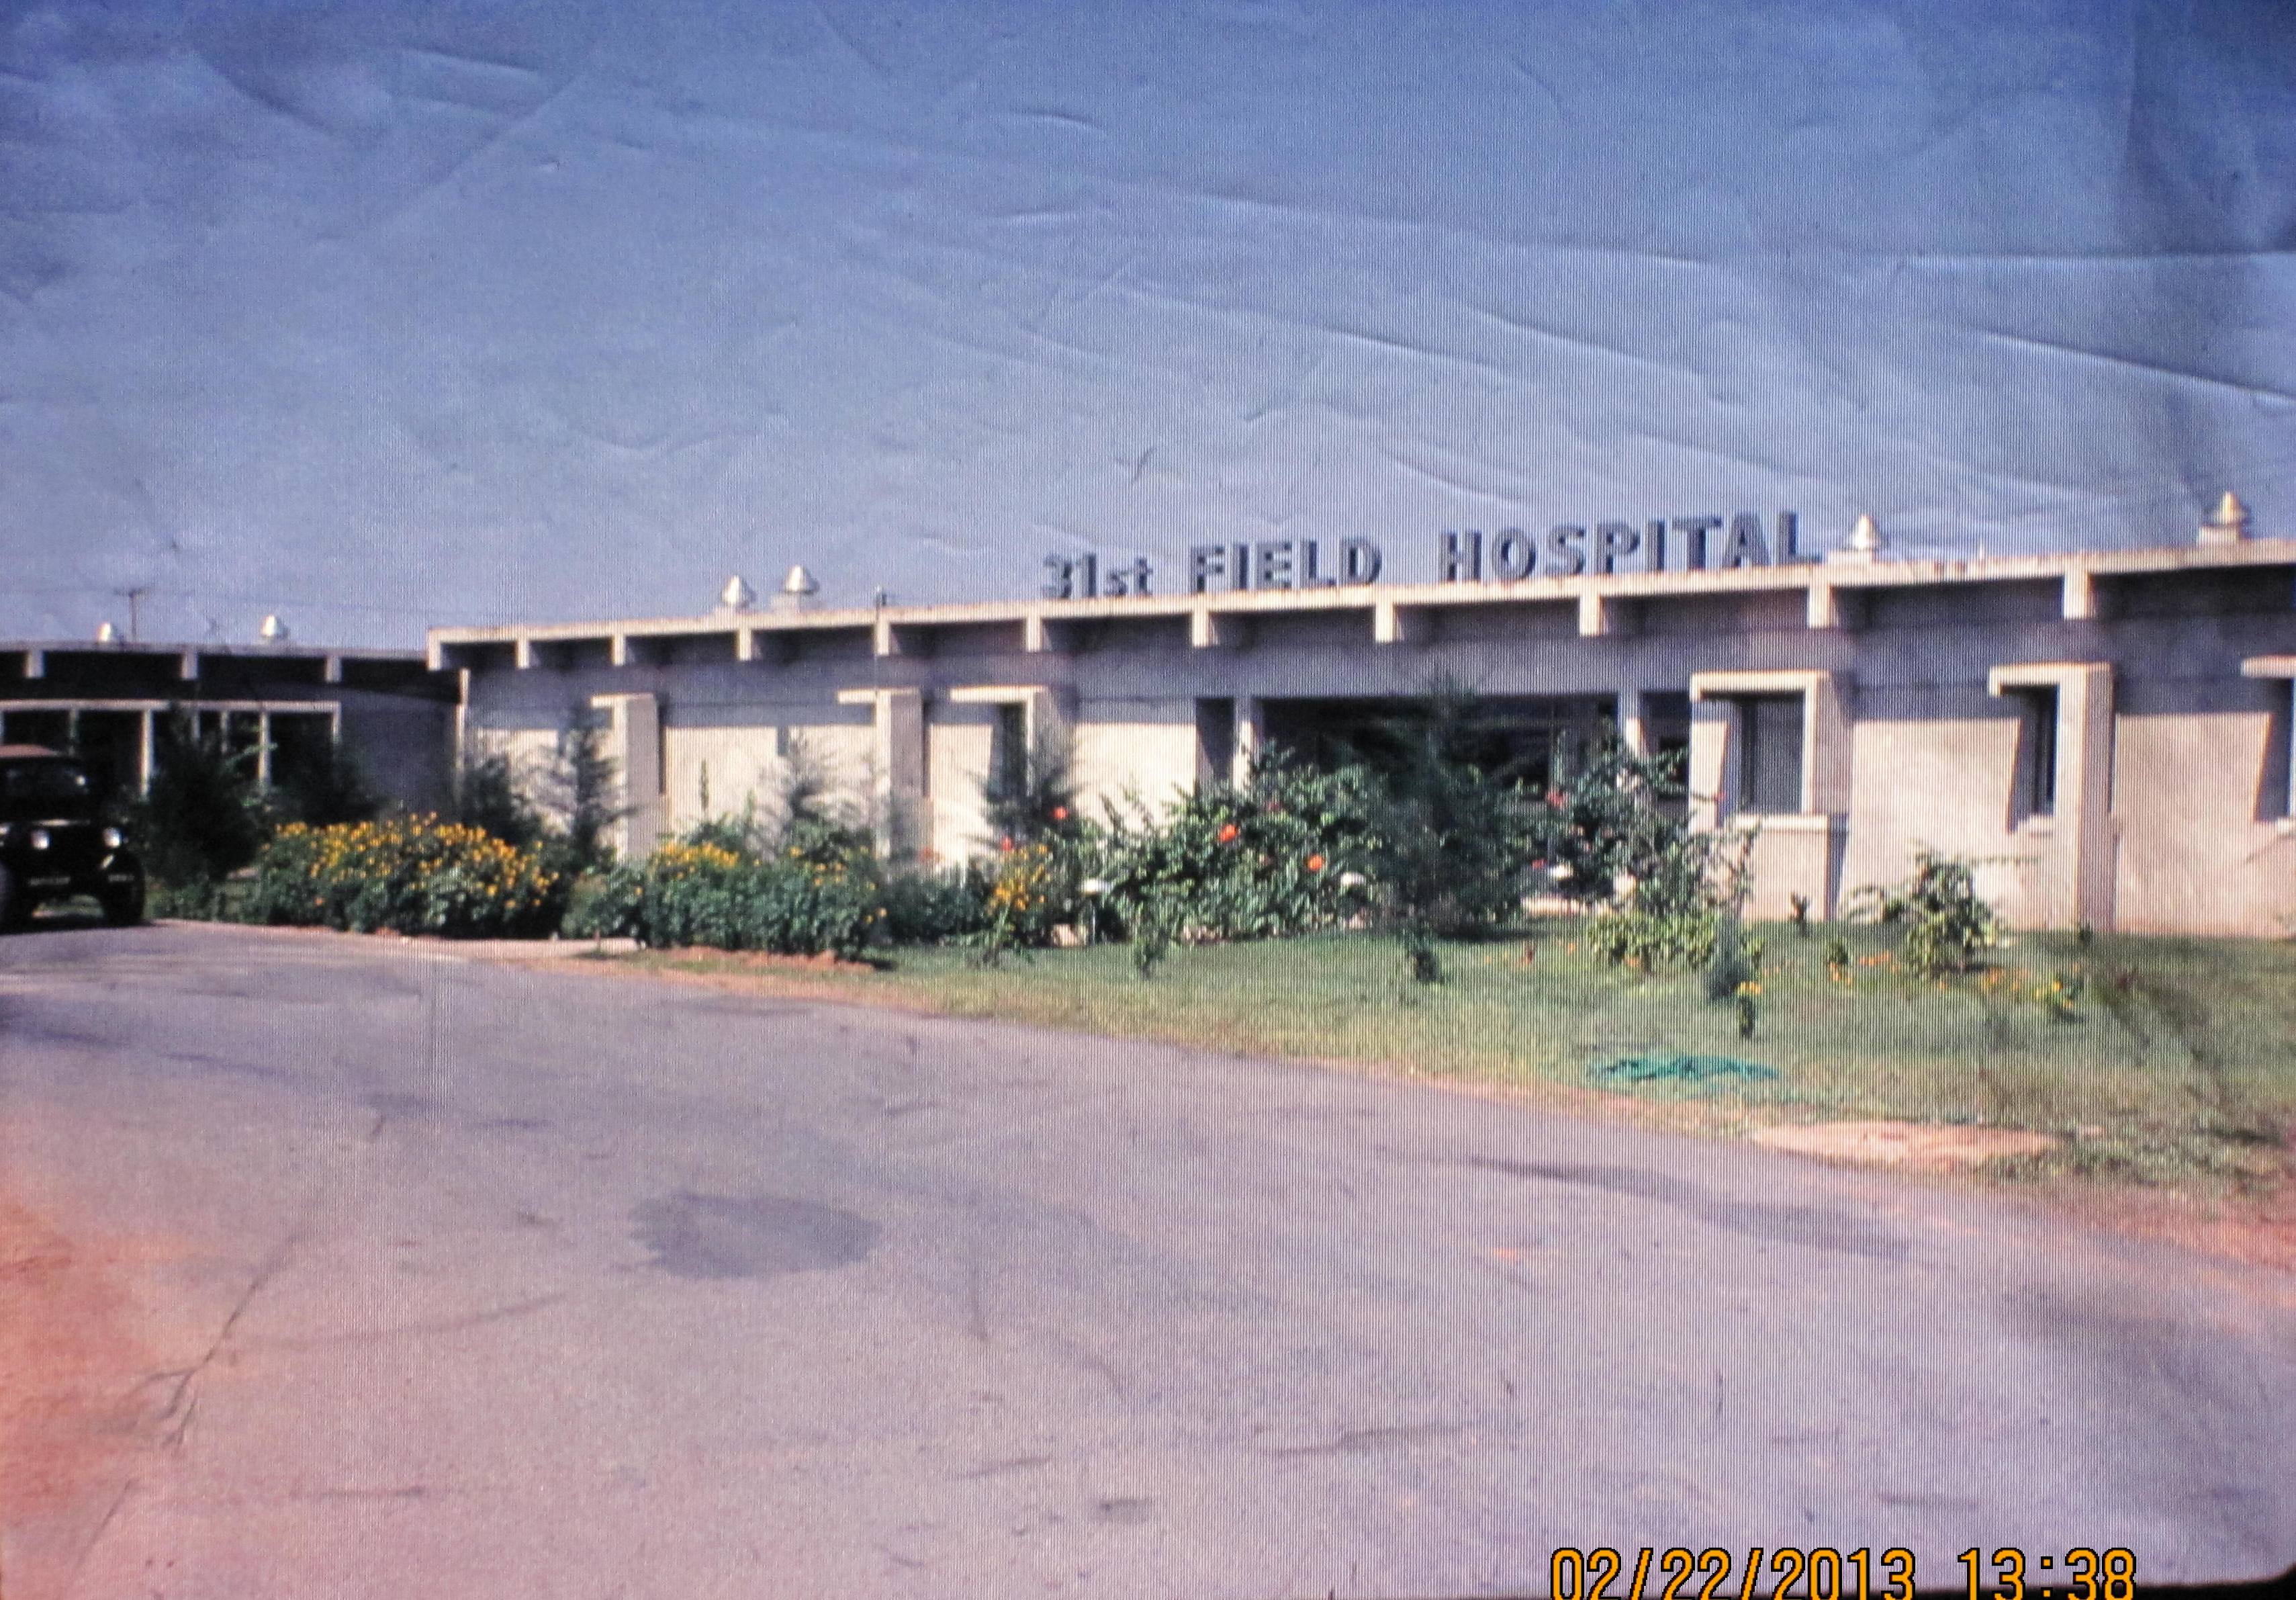 31st Field Hospital